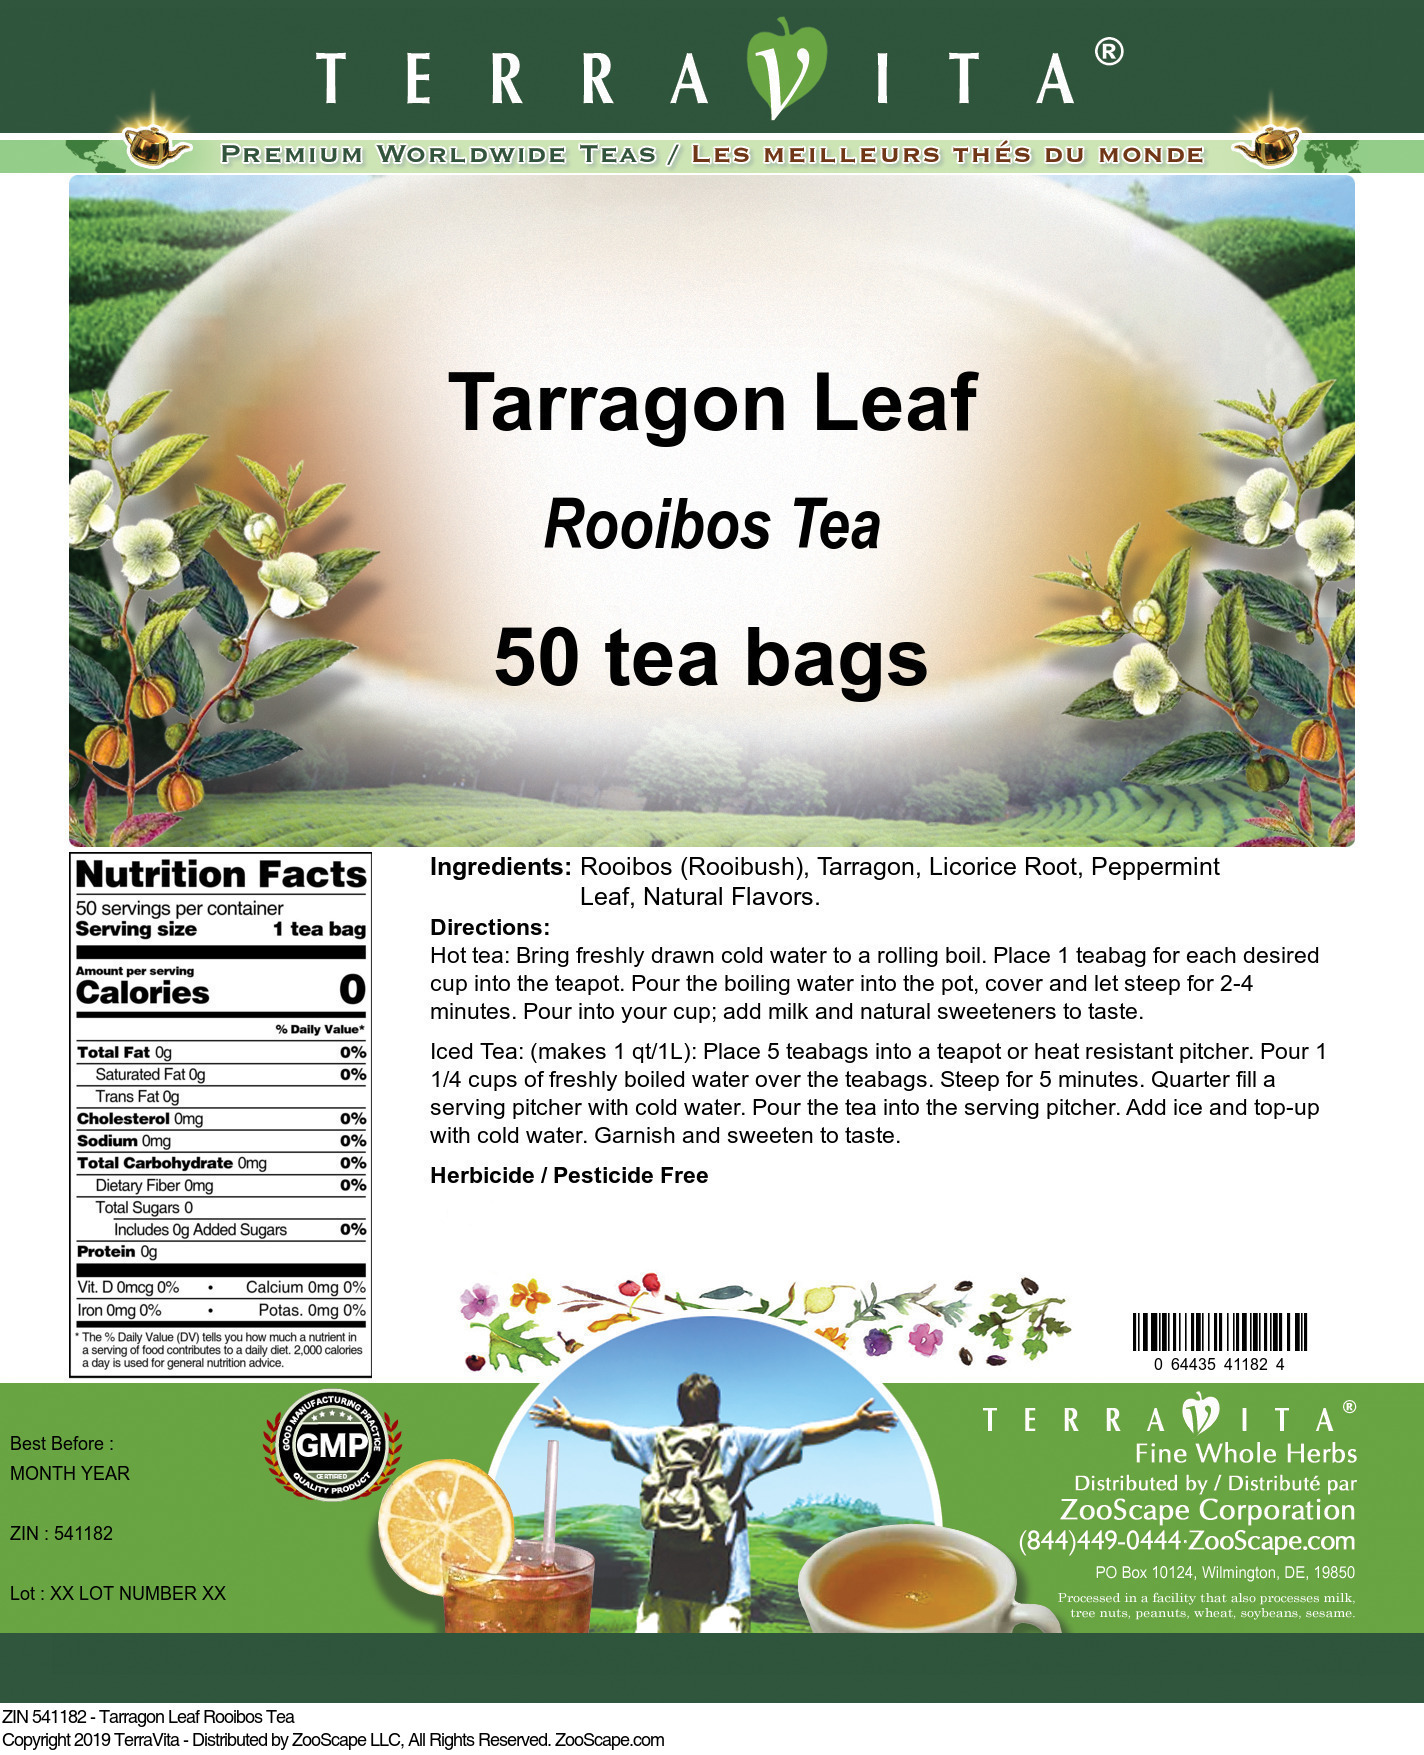 Tarragon Leaf Rooibos Tea - Label